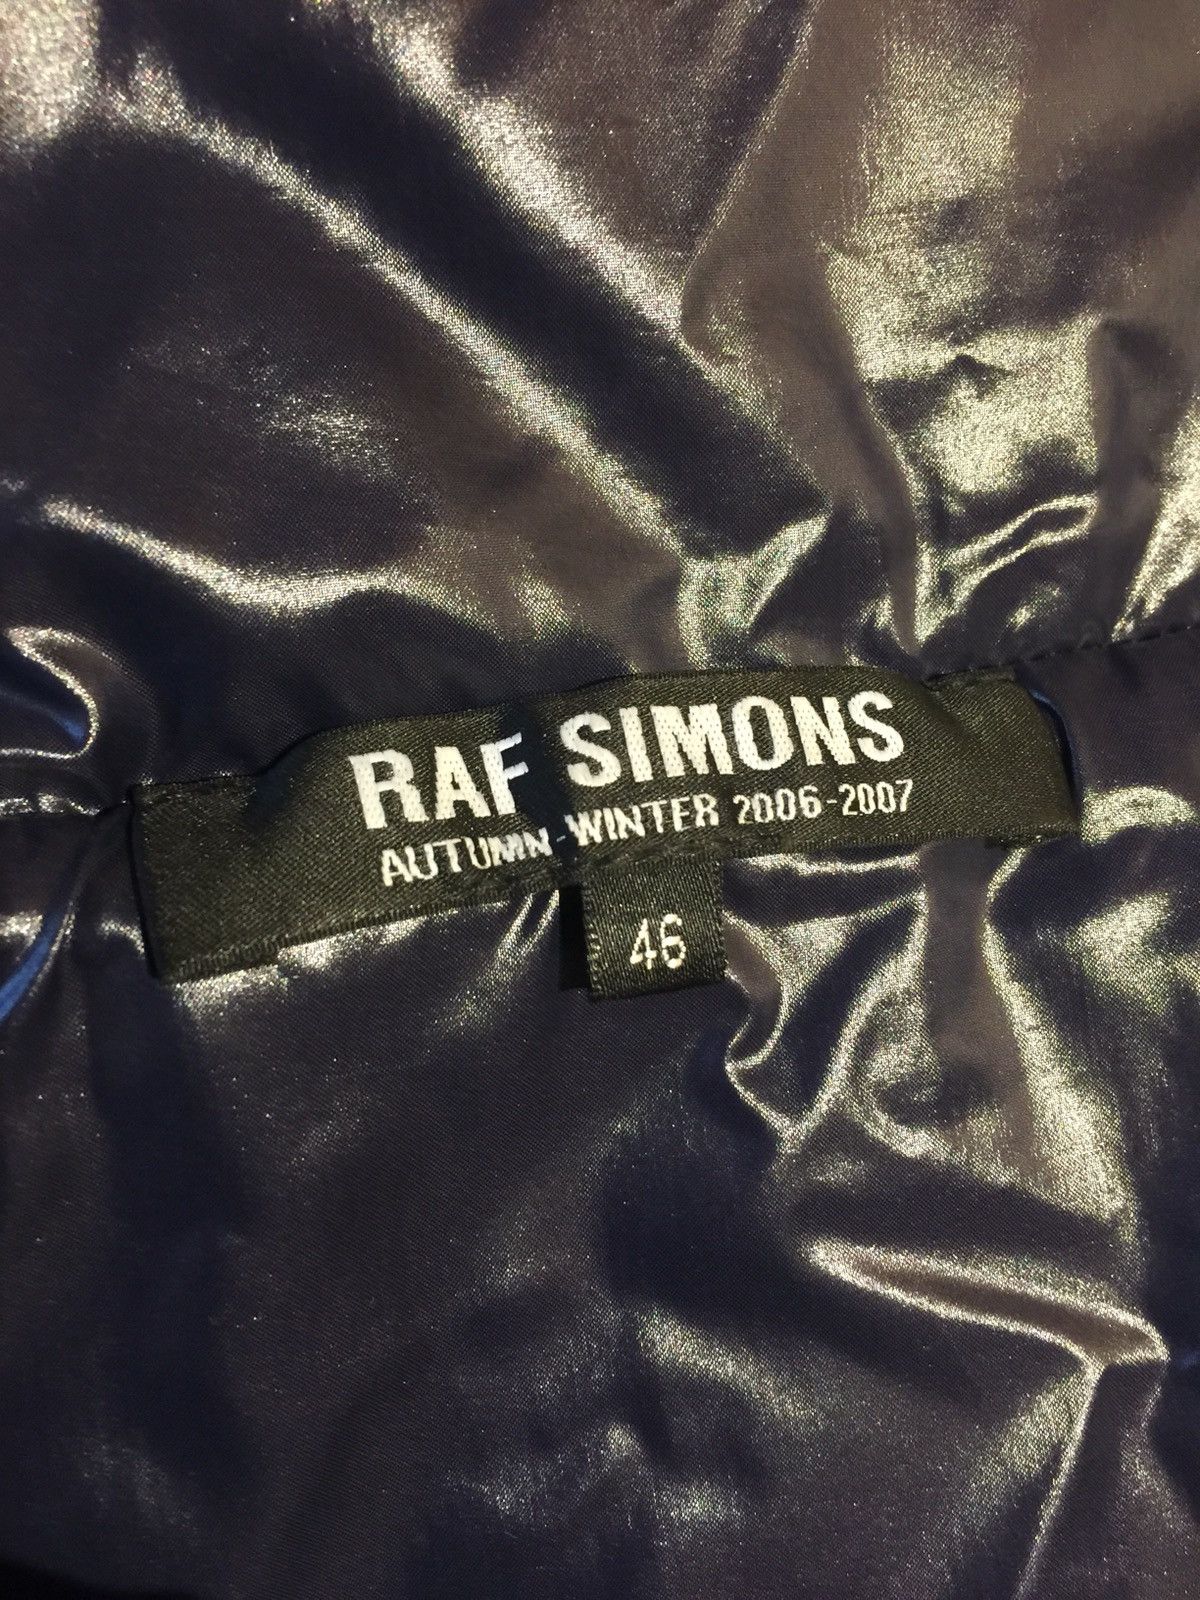 Raf Simons Raf Simons 2006-2007 Archival 2 Way Alien Puffer Jacket Size US S / EU 44-46 / 1 - 9 Thumbnail